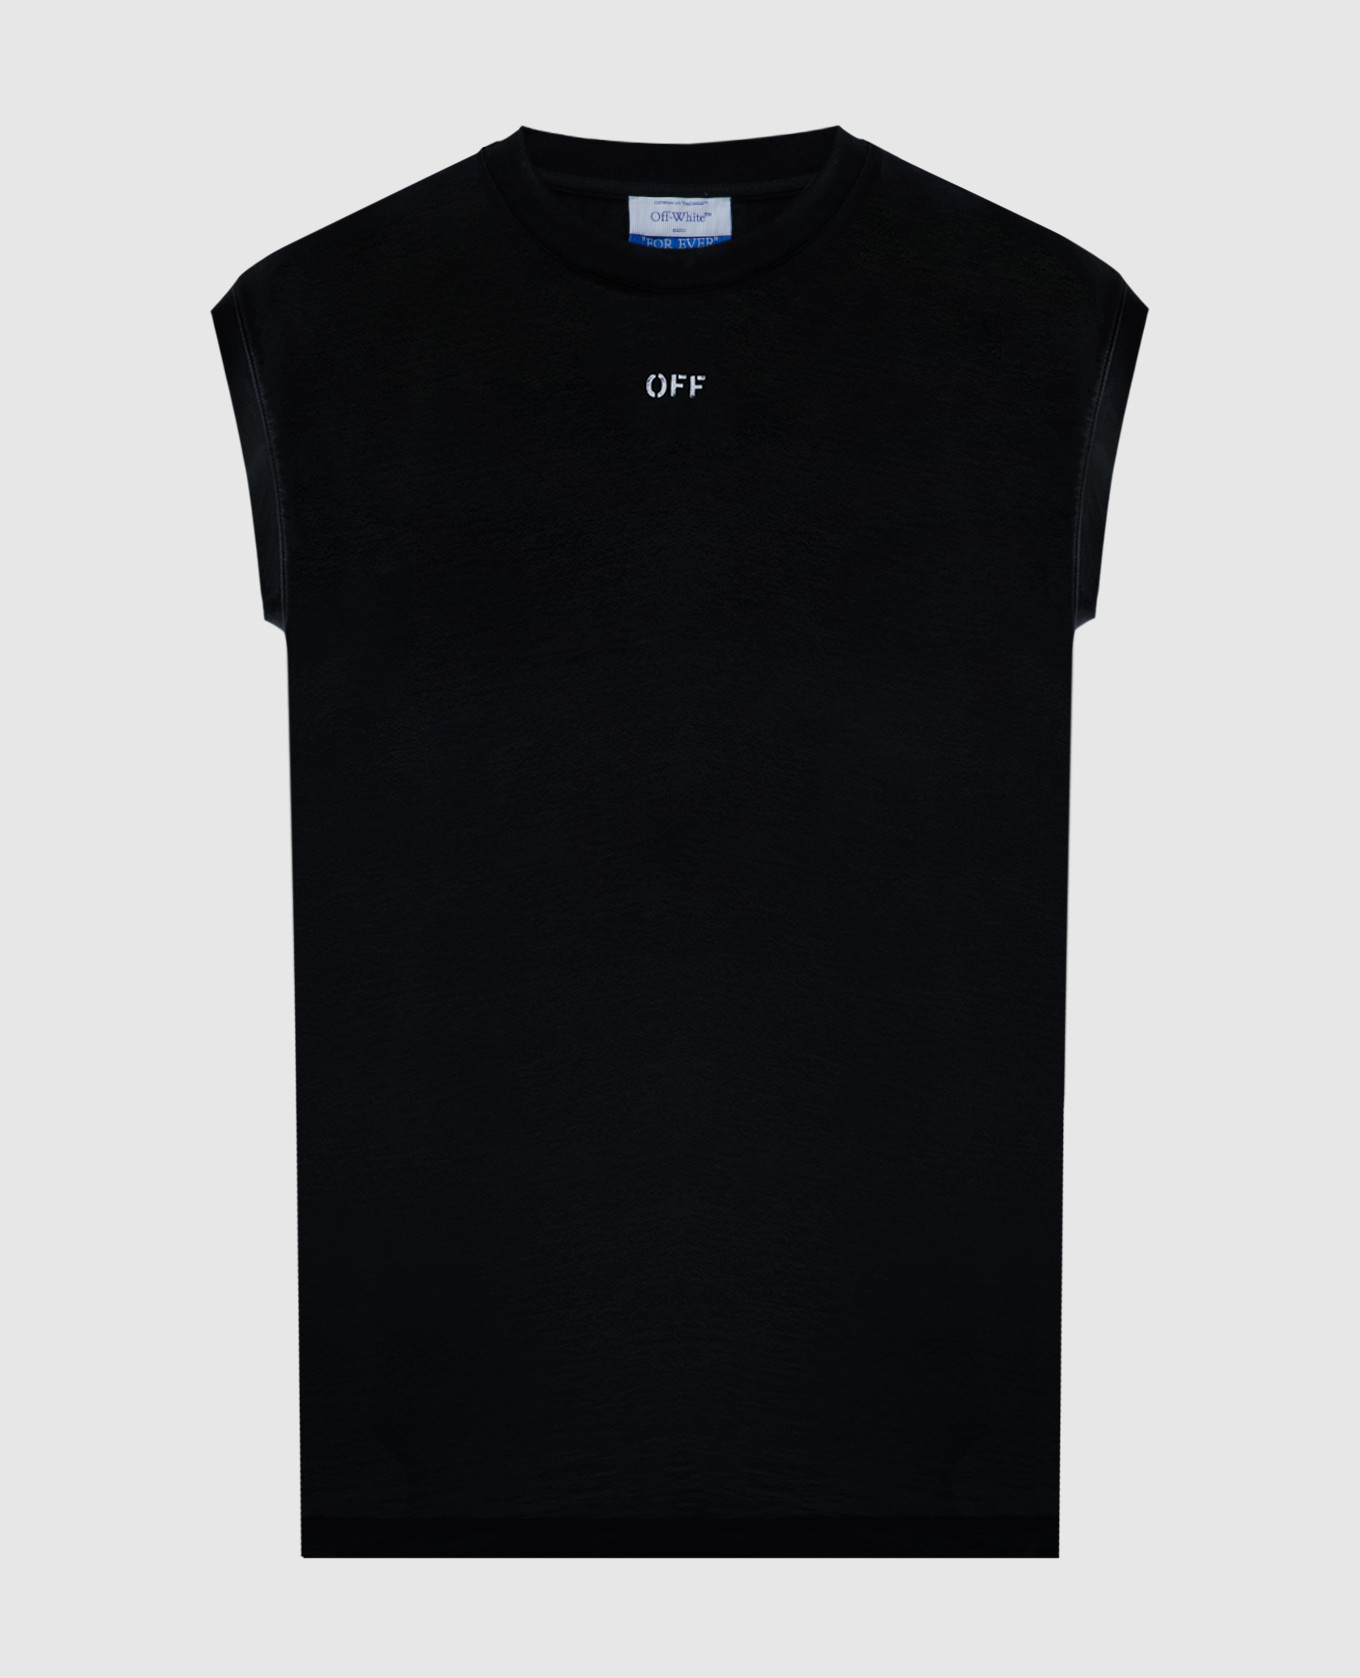 Black t-shirt with Off logo print